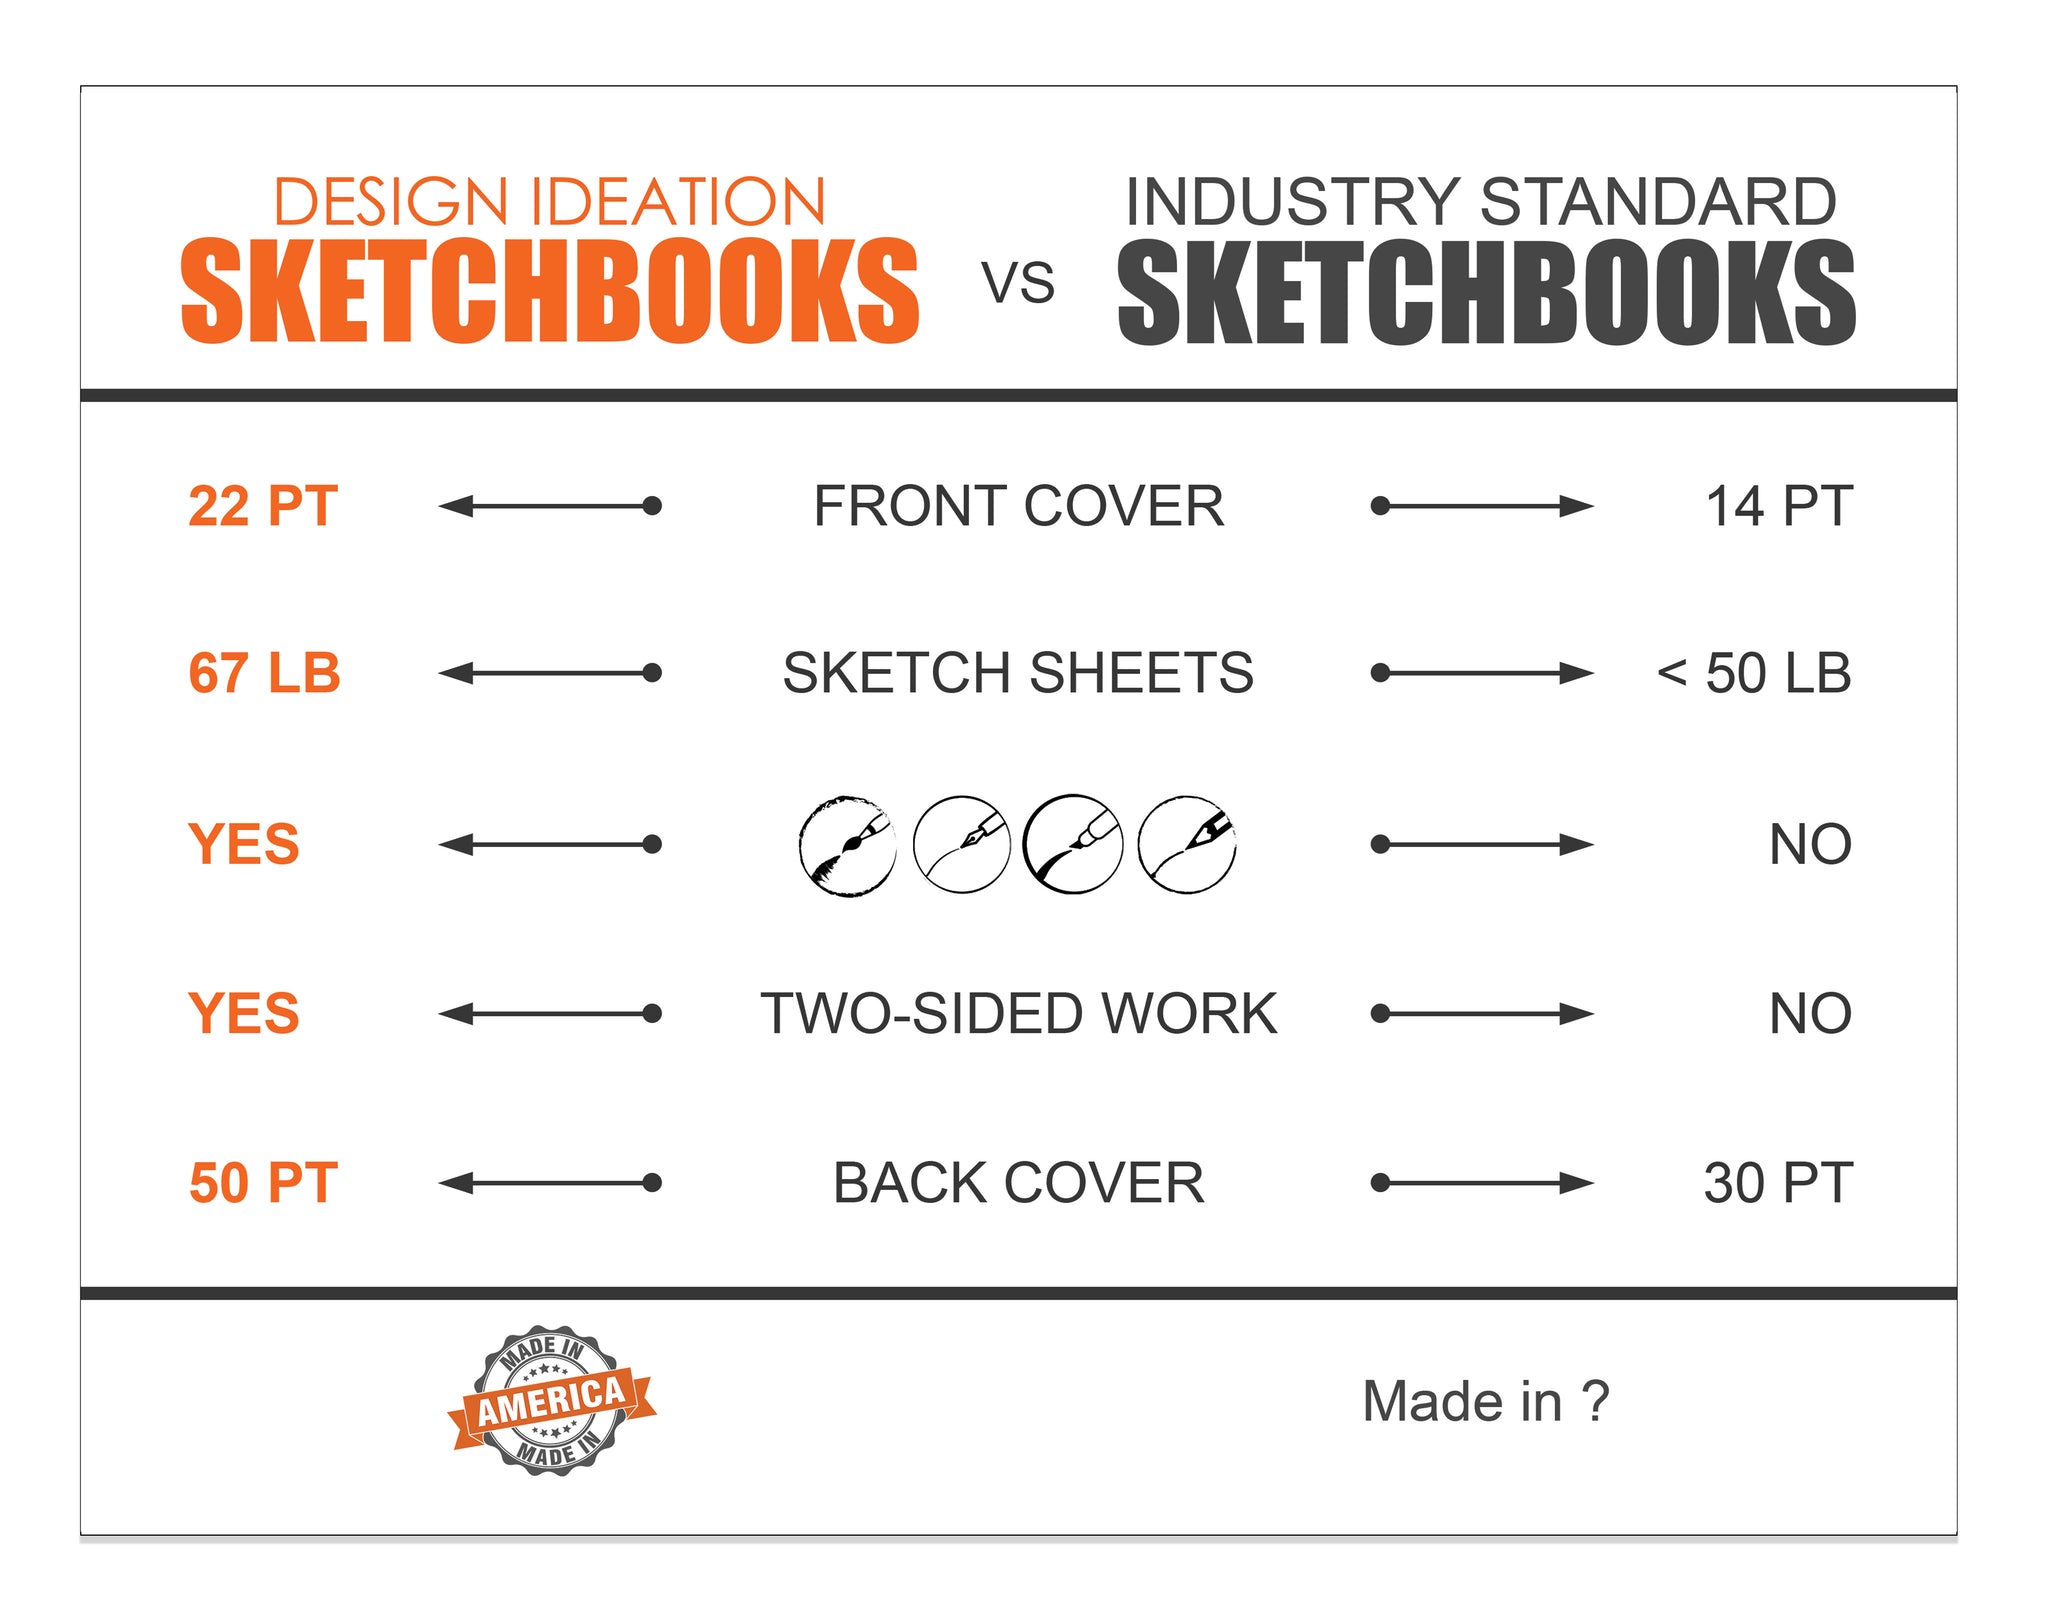 QUICK SKETCH Sketchbook : Multi-media Paper Book. (6 x 12) 60S – Design  Ideation Studio